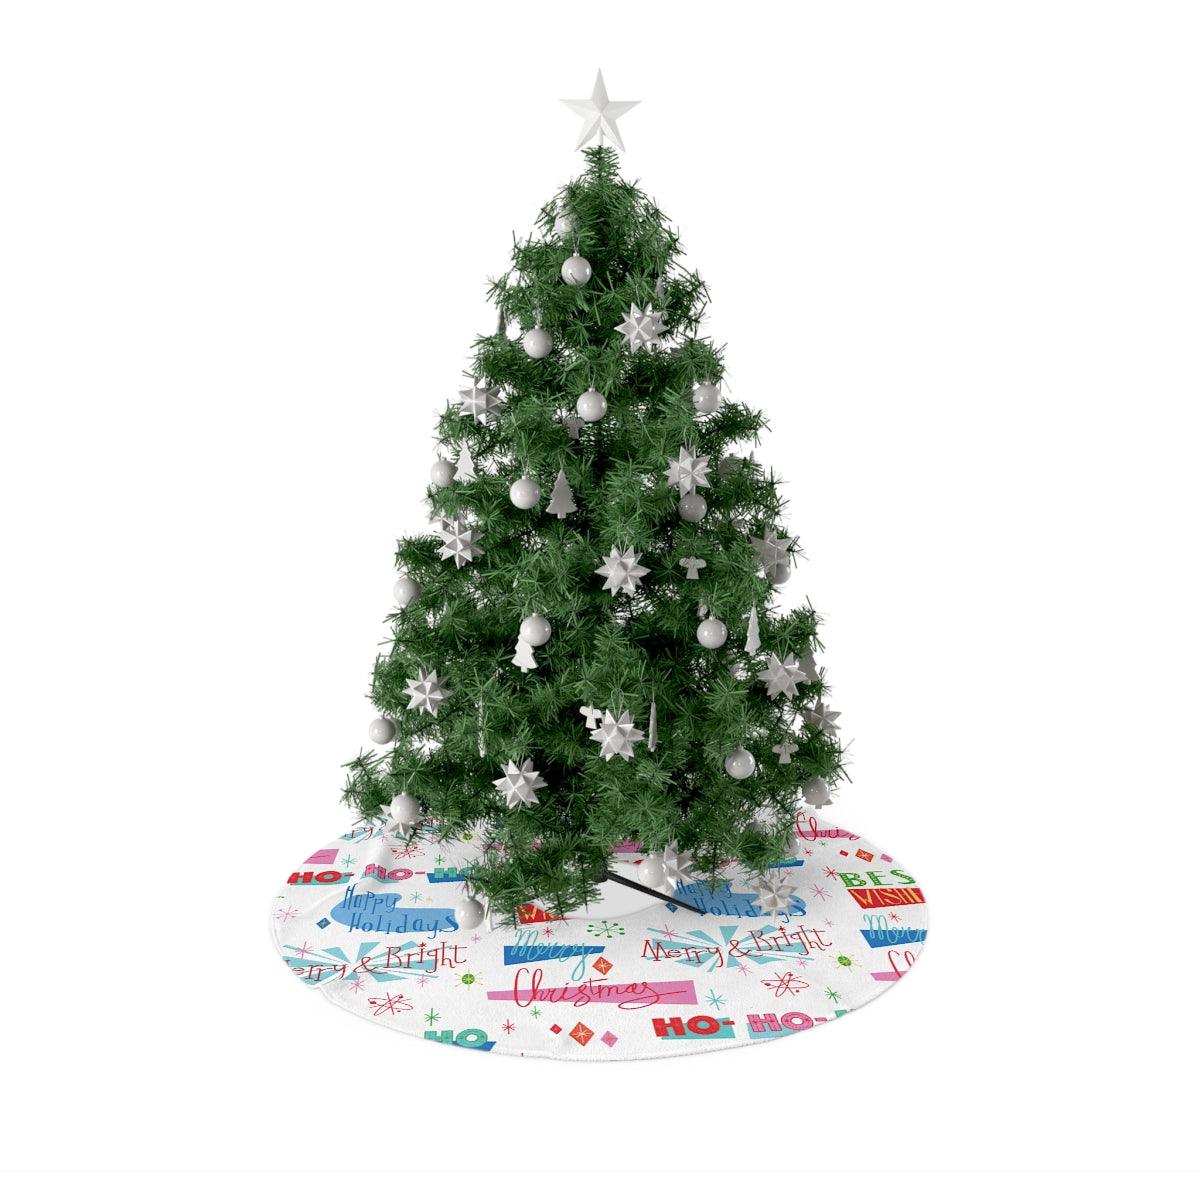 Retro 50's Inspired Atomic Greetings Christmas Tree Skirt | lovevisionkarma.com